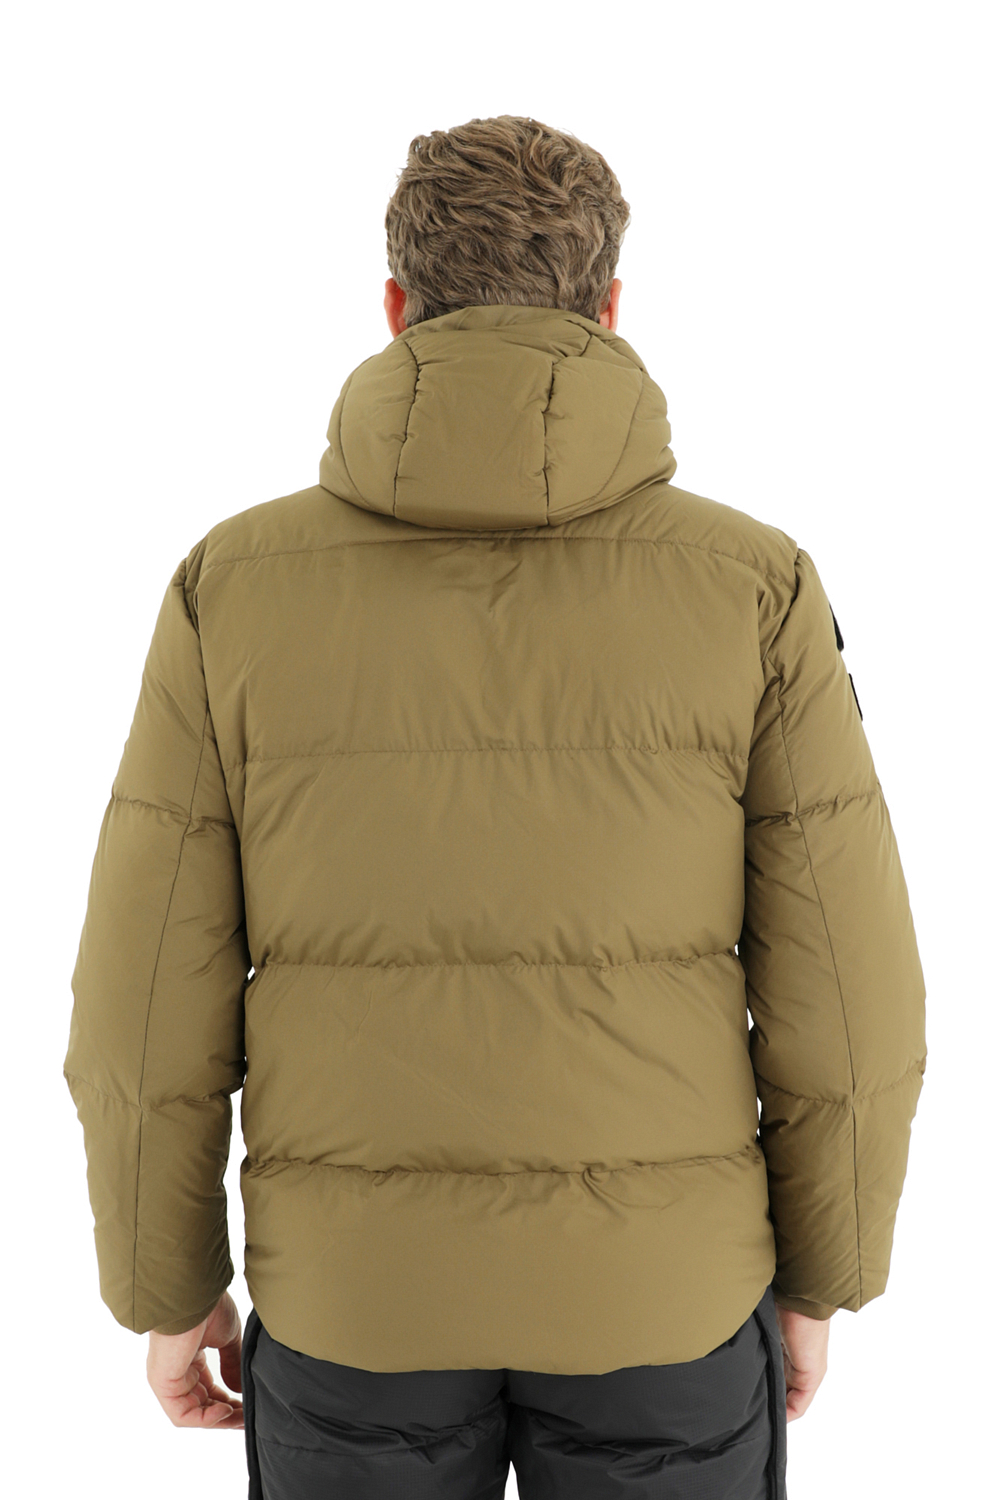 Куртка для активного отдыха Dolomite Jacket M's 1954 Karakorum Evo Moss Green